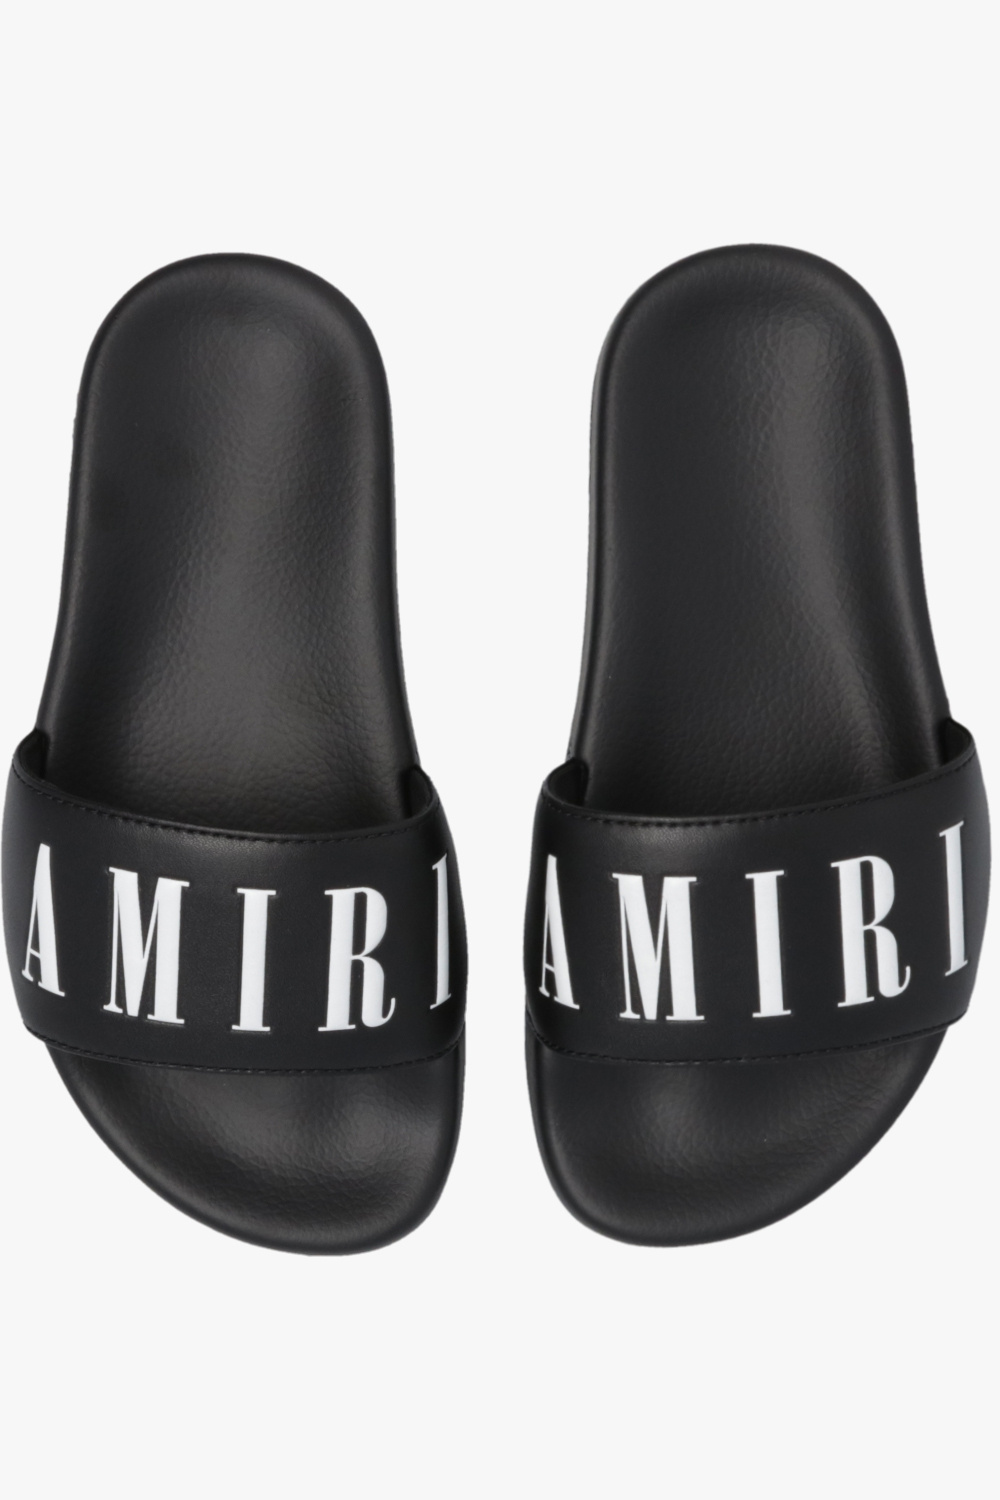 Amiri Kids men offwhite x nike air max 97 menta running shoe sku126427368 online sale